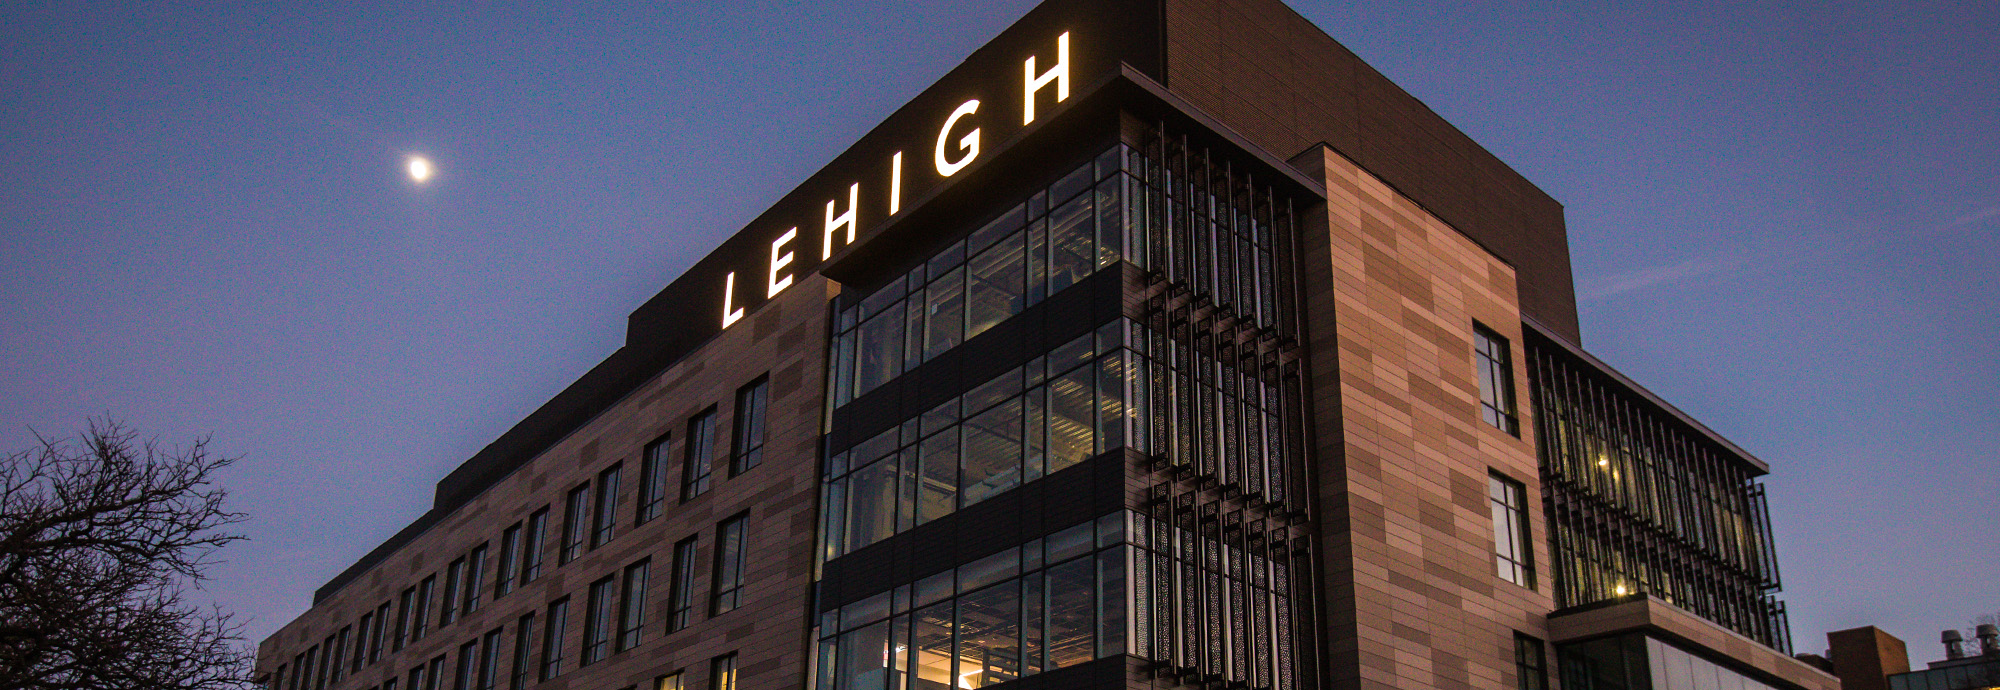 Lehigh sign on HST building